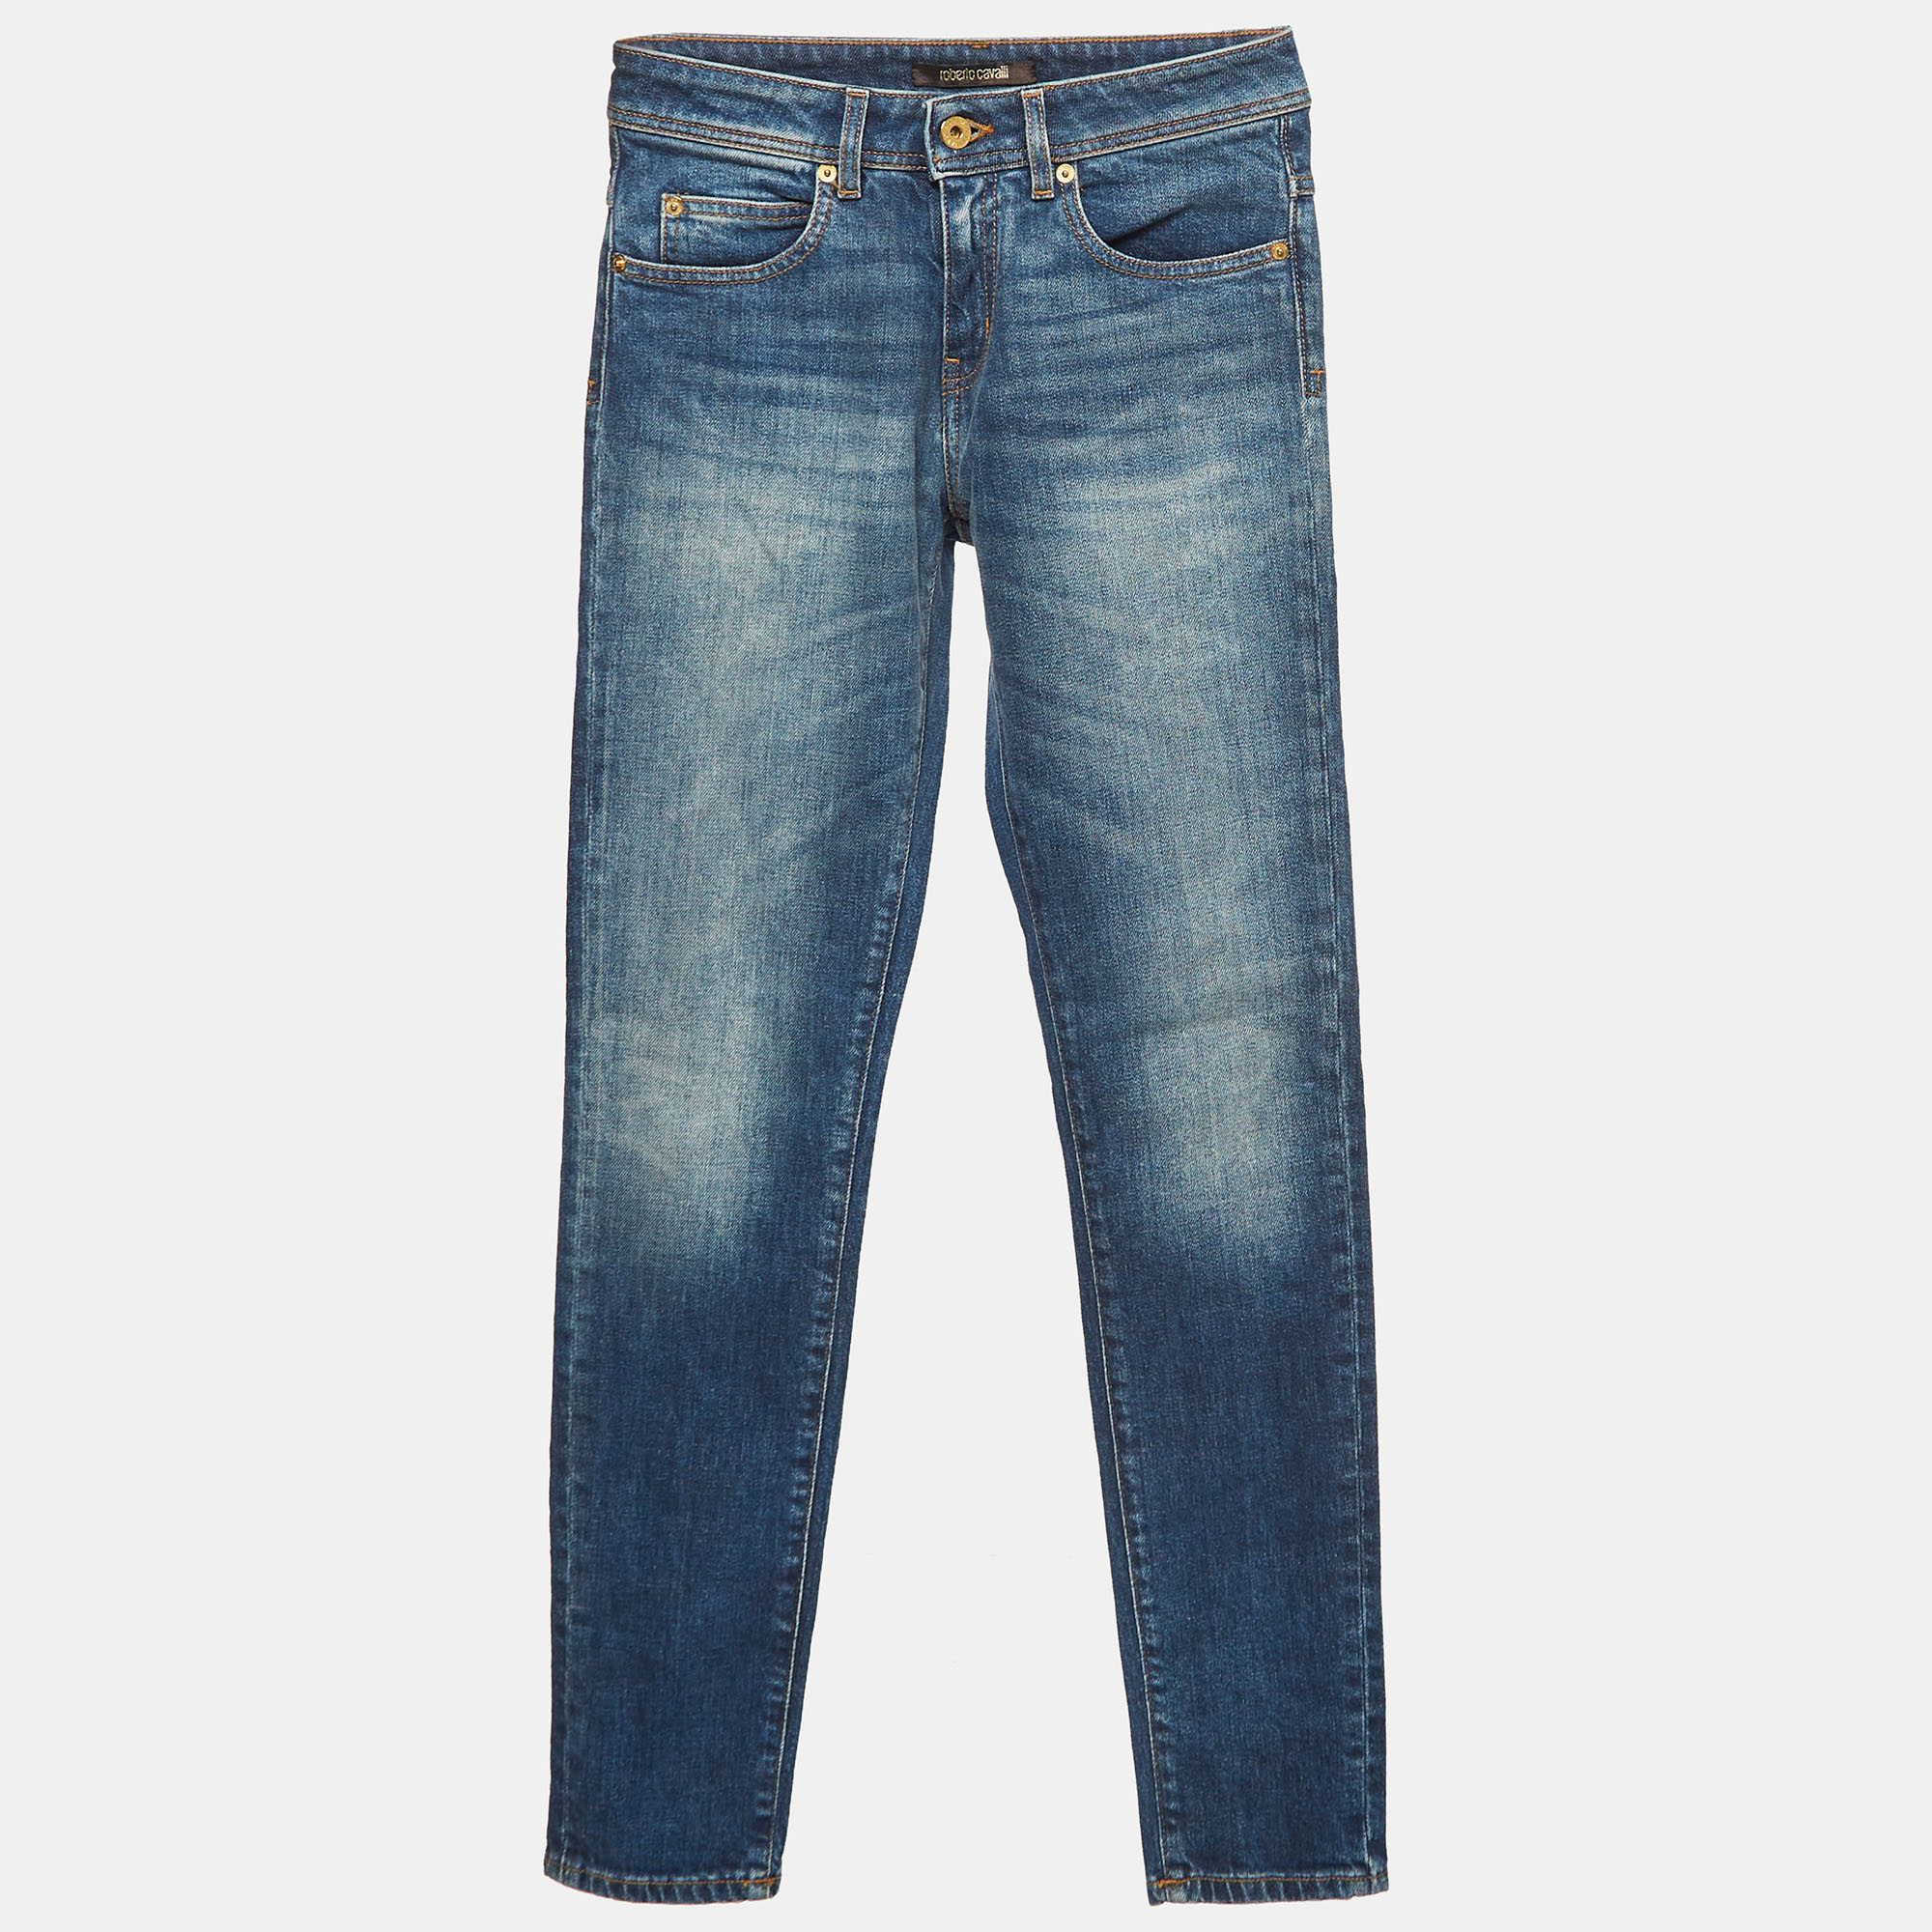 Roberto Cavalli Blue Washed Denim Skinny Jeans S Waist 26